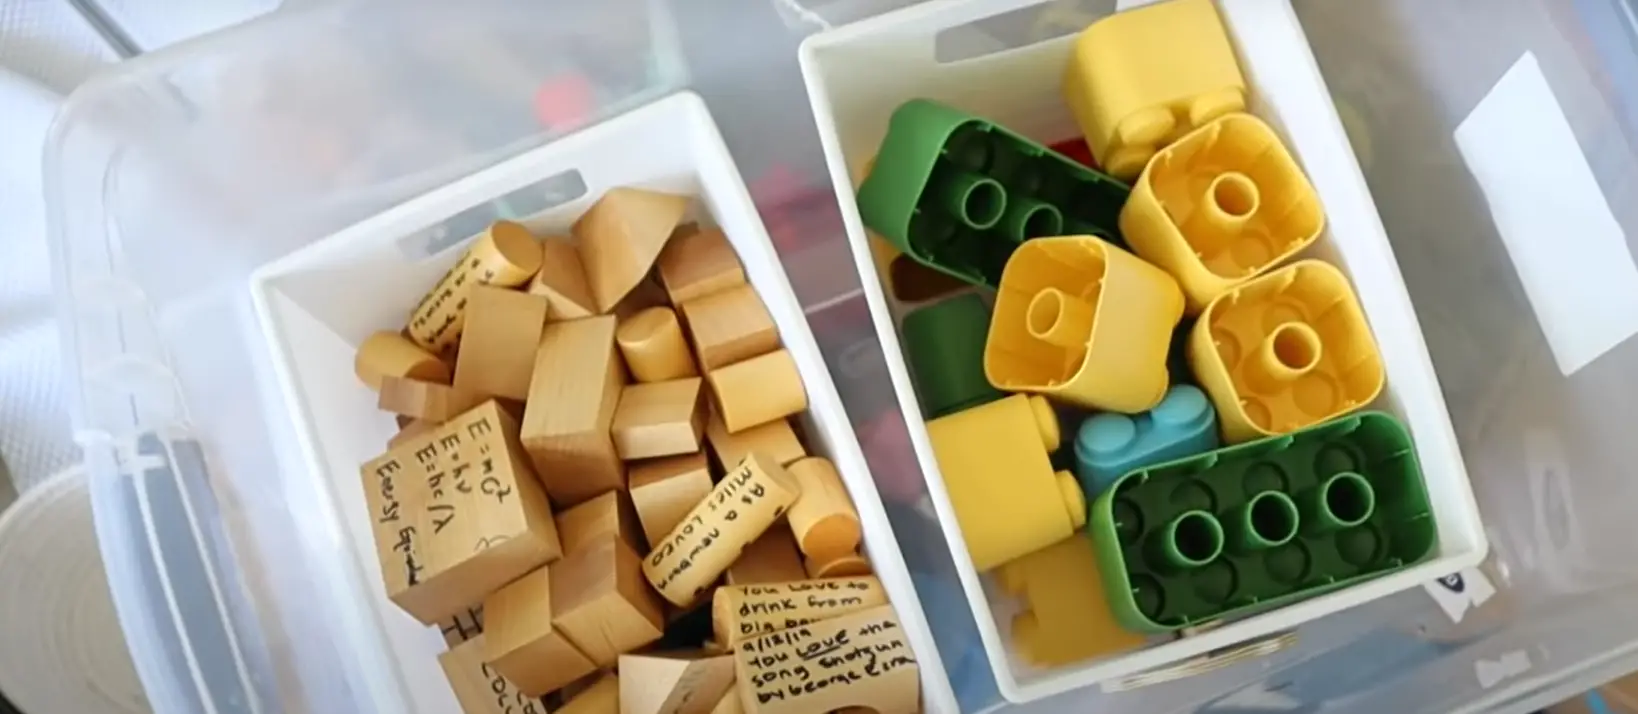 Get storage bins for smaller toys